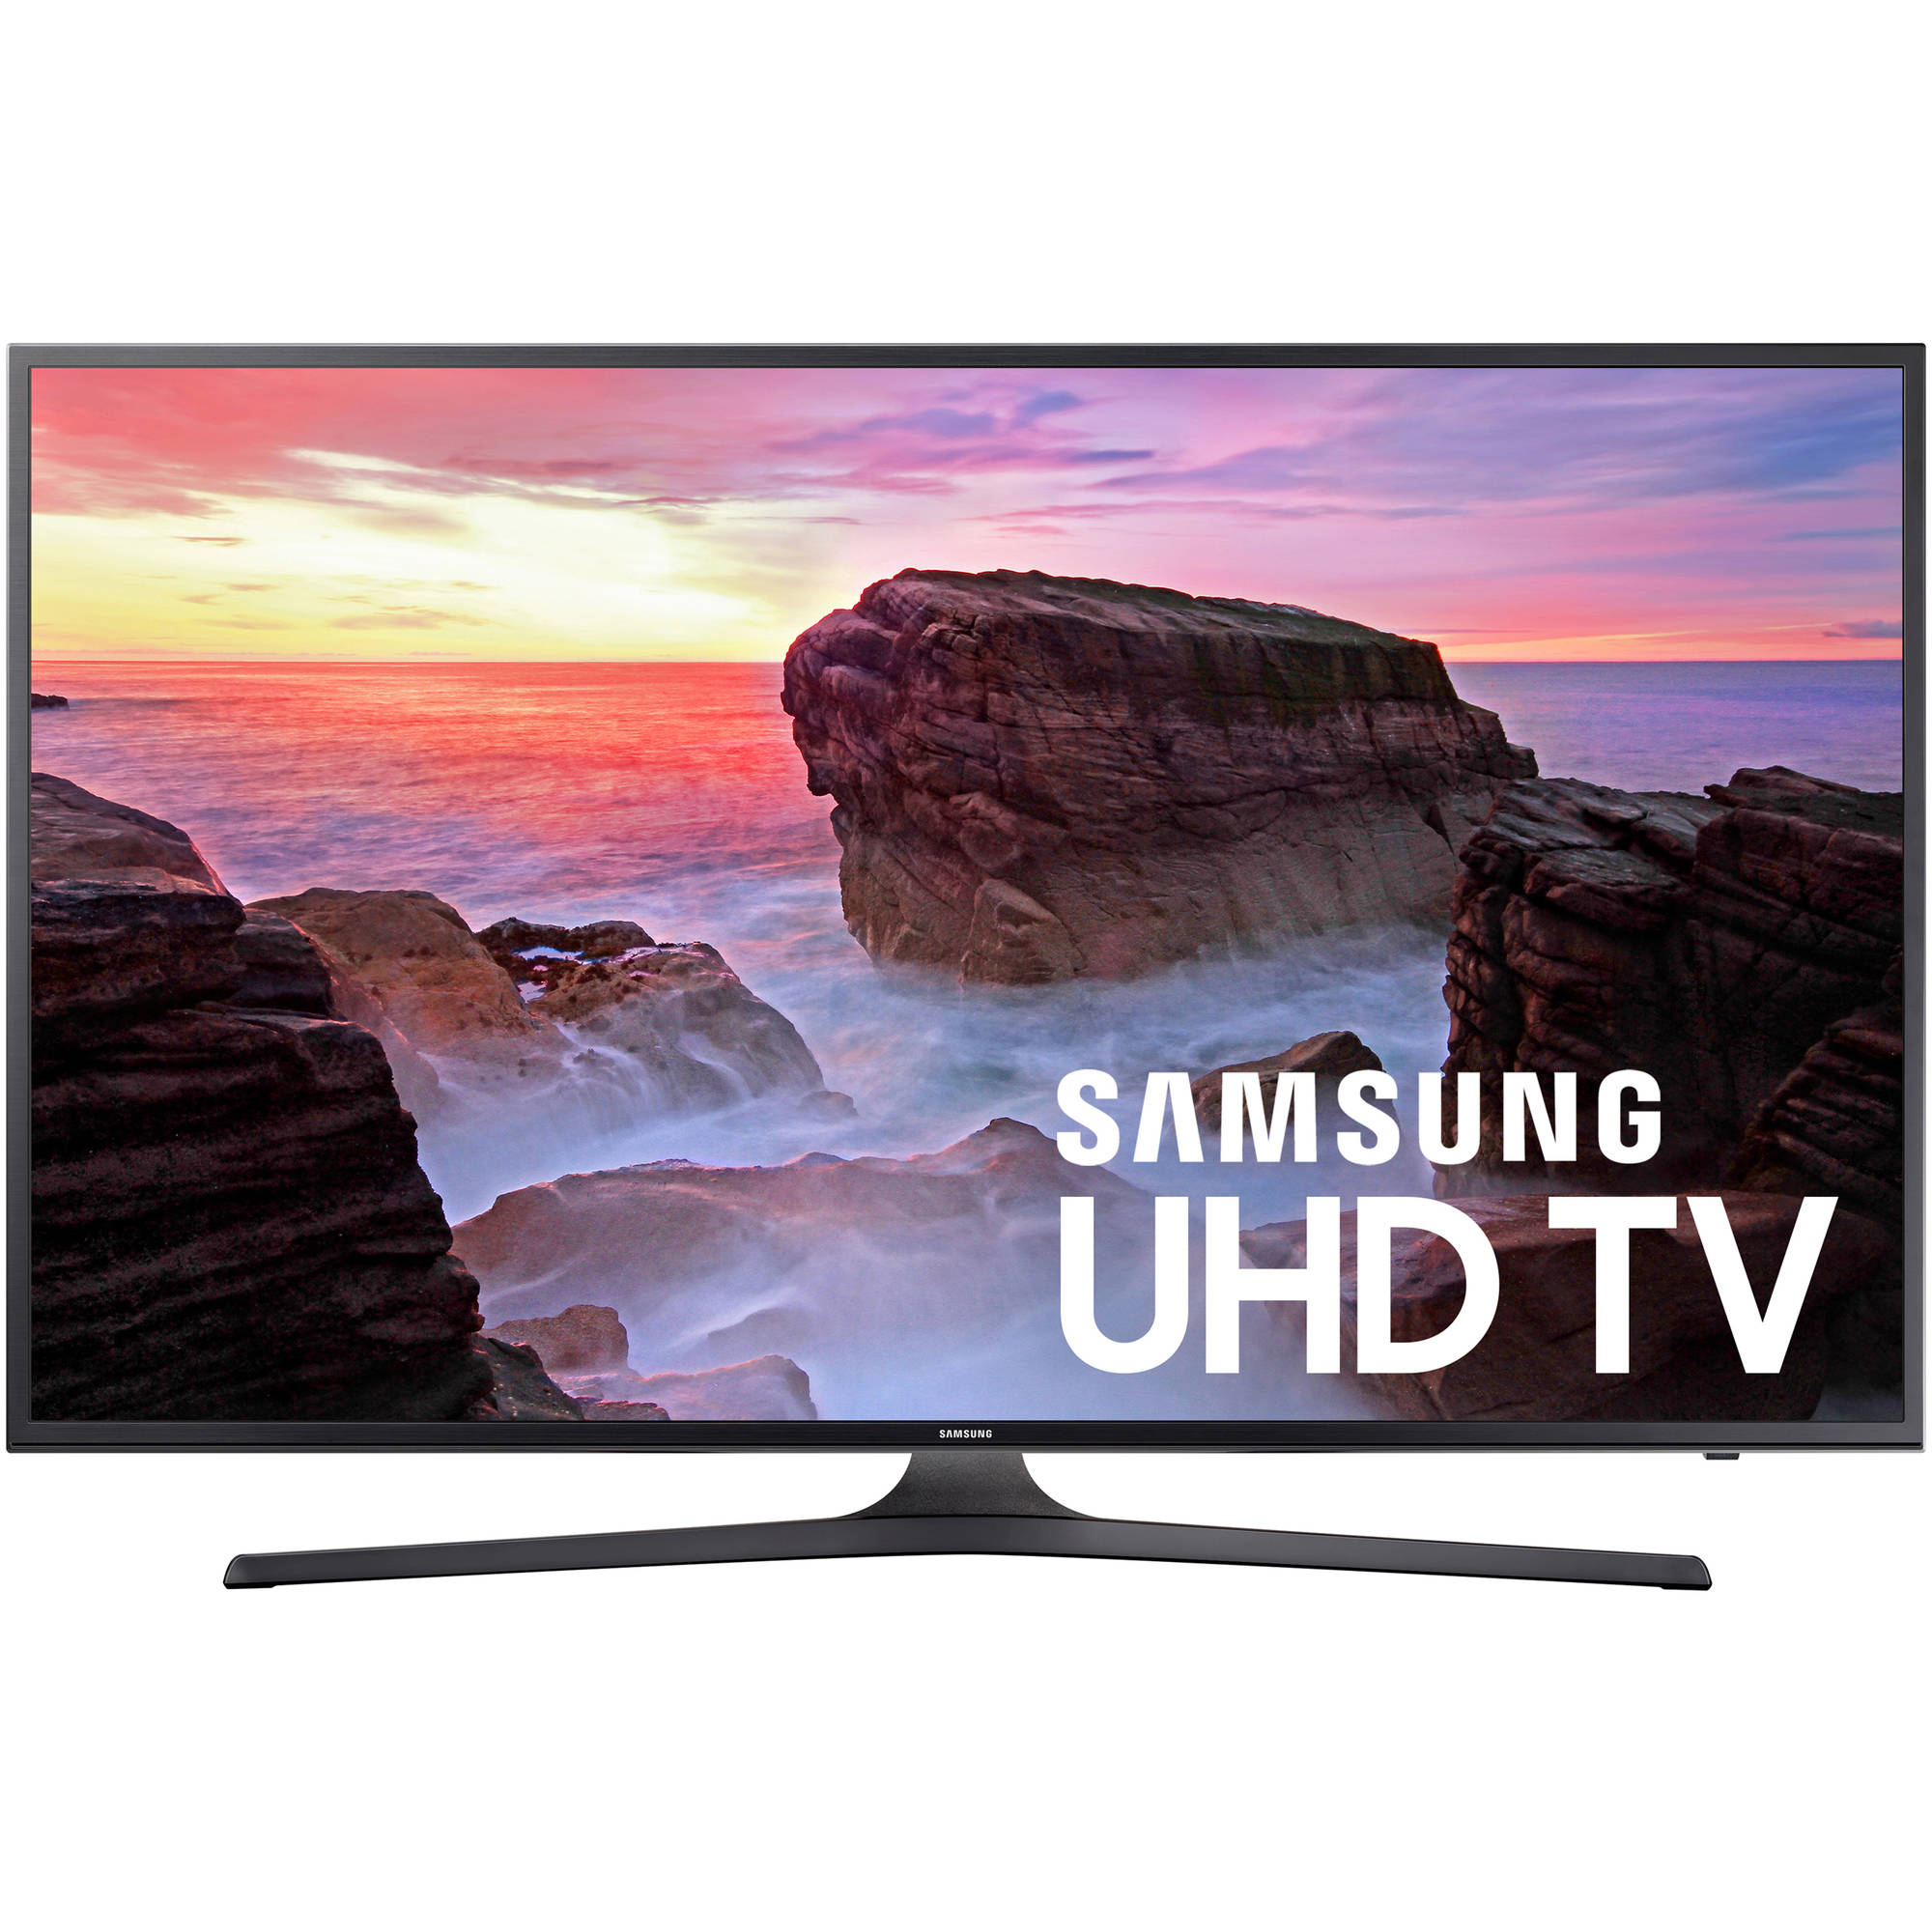 Samsung 50" Class 4K (2160P) Smart LED TV (UN50MU6300FXZA)